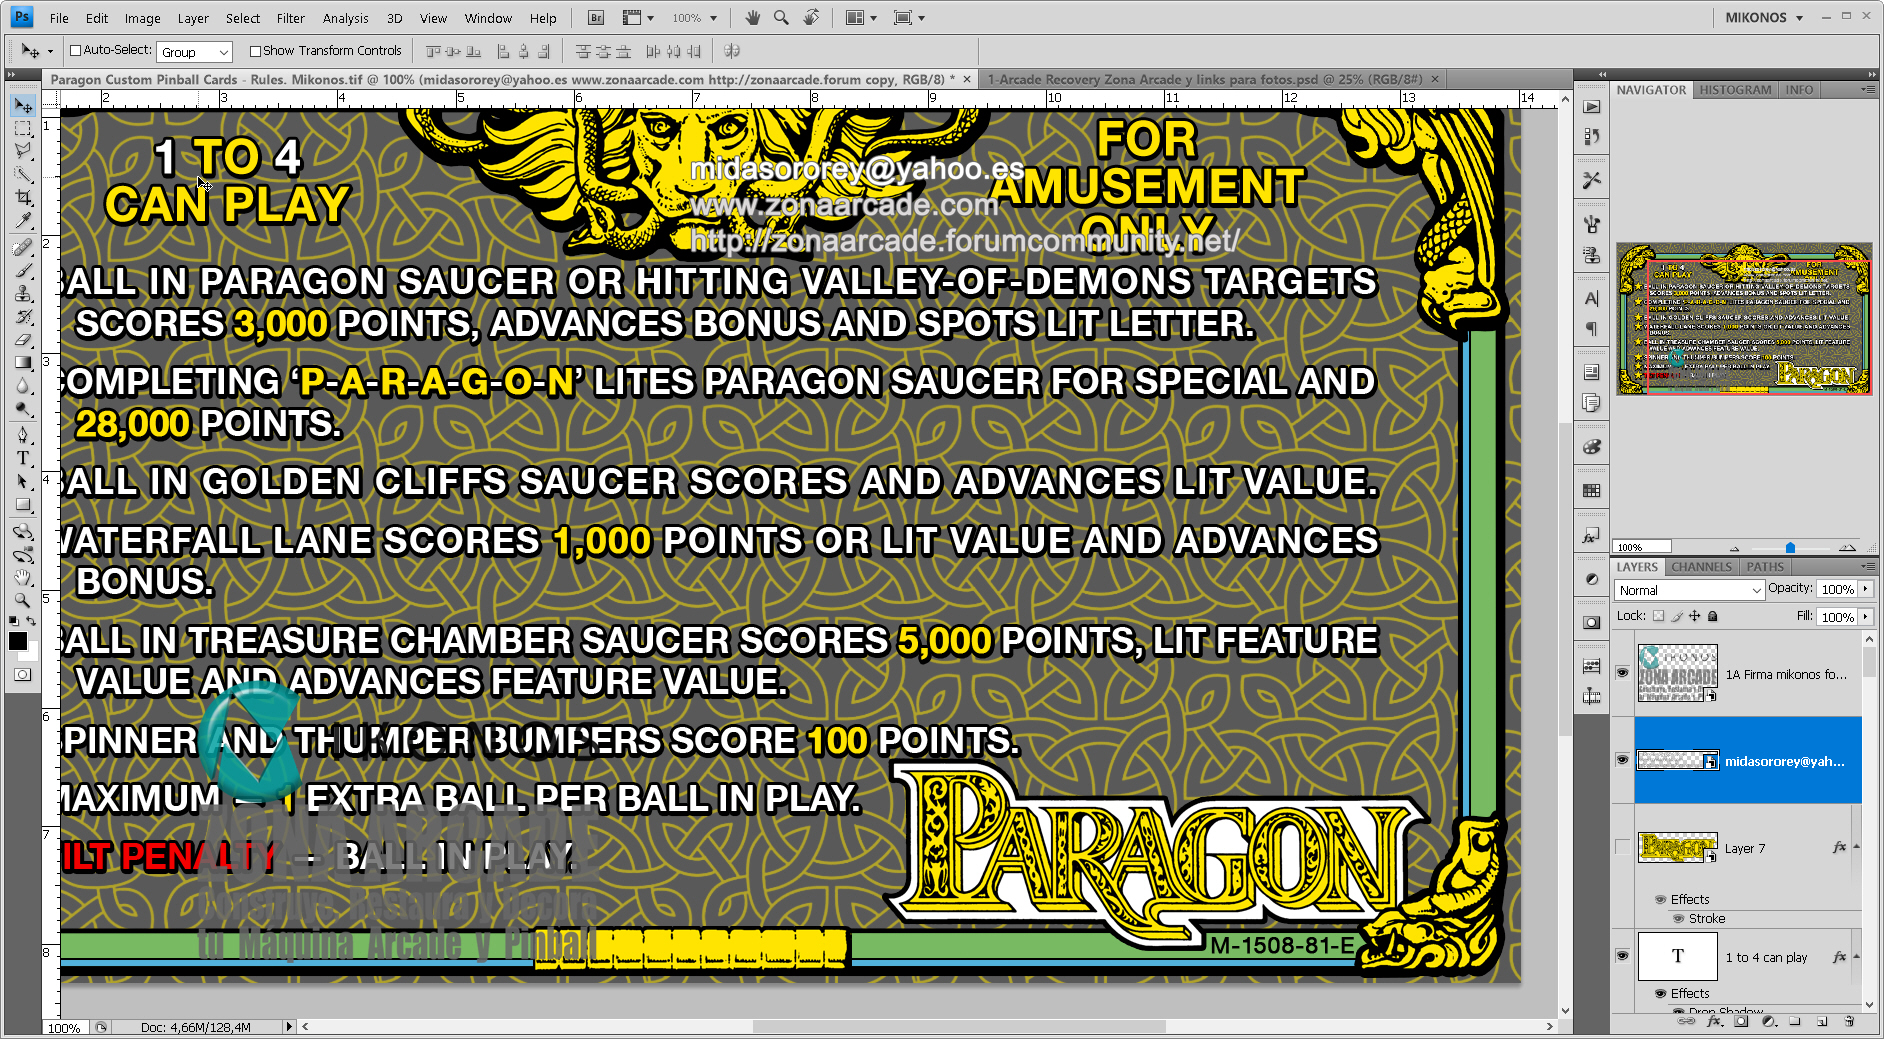 Paragon Custom Pinball Card - Rules. Mikonos2